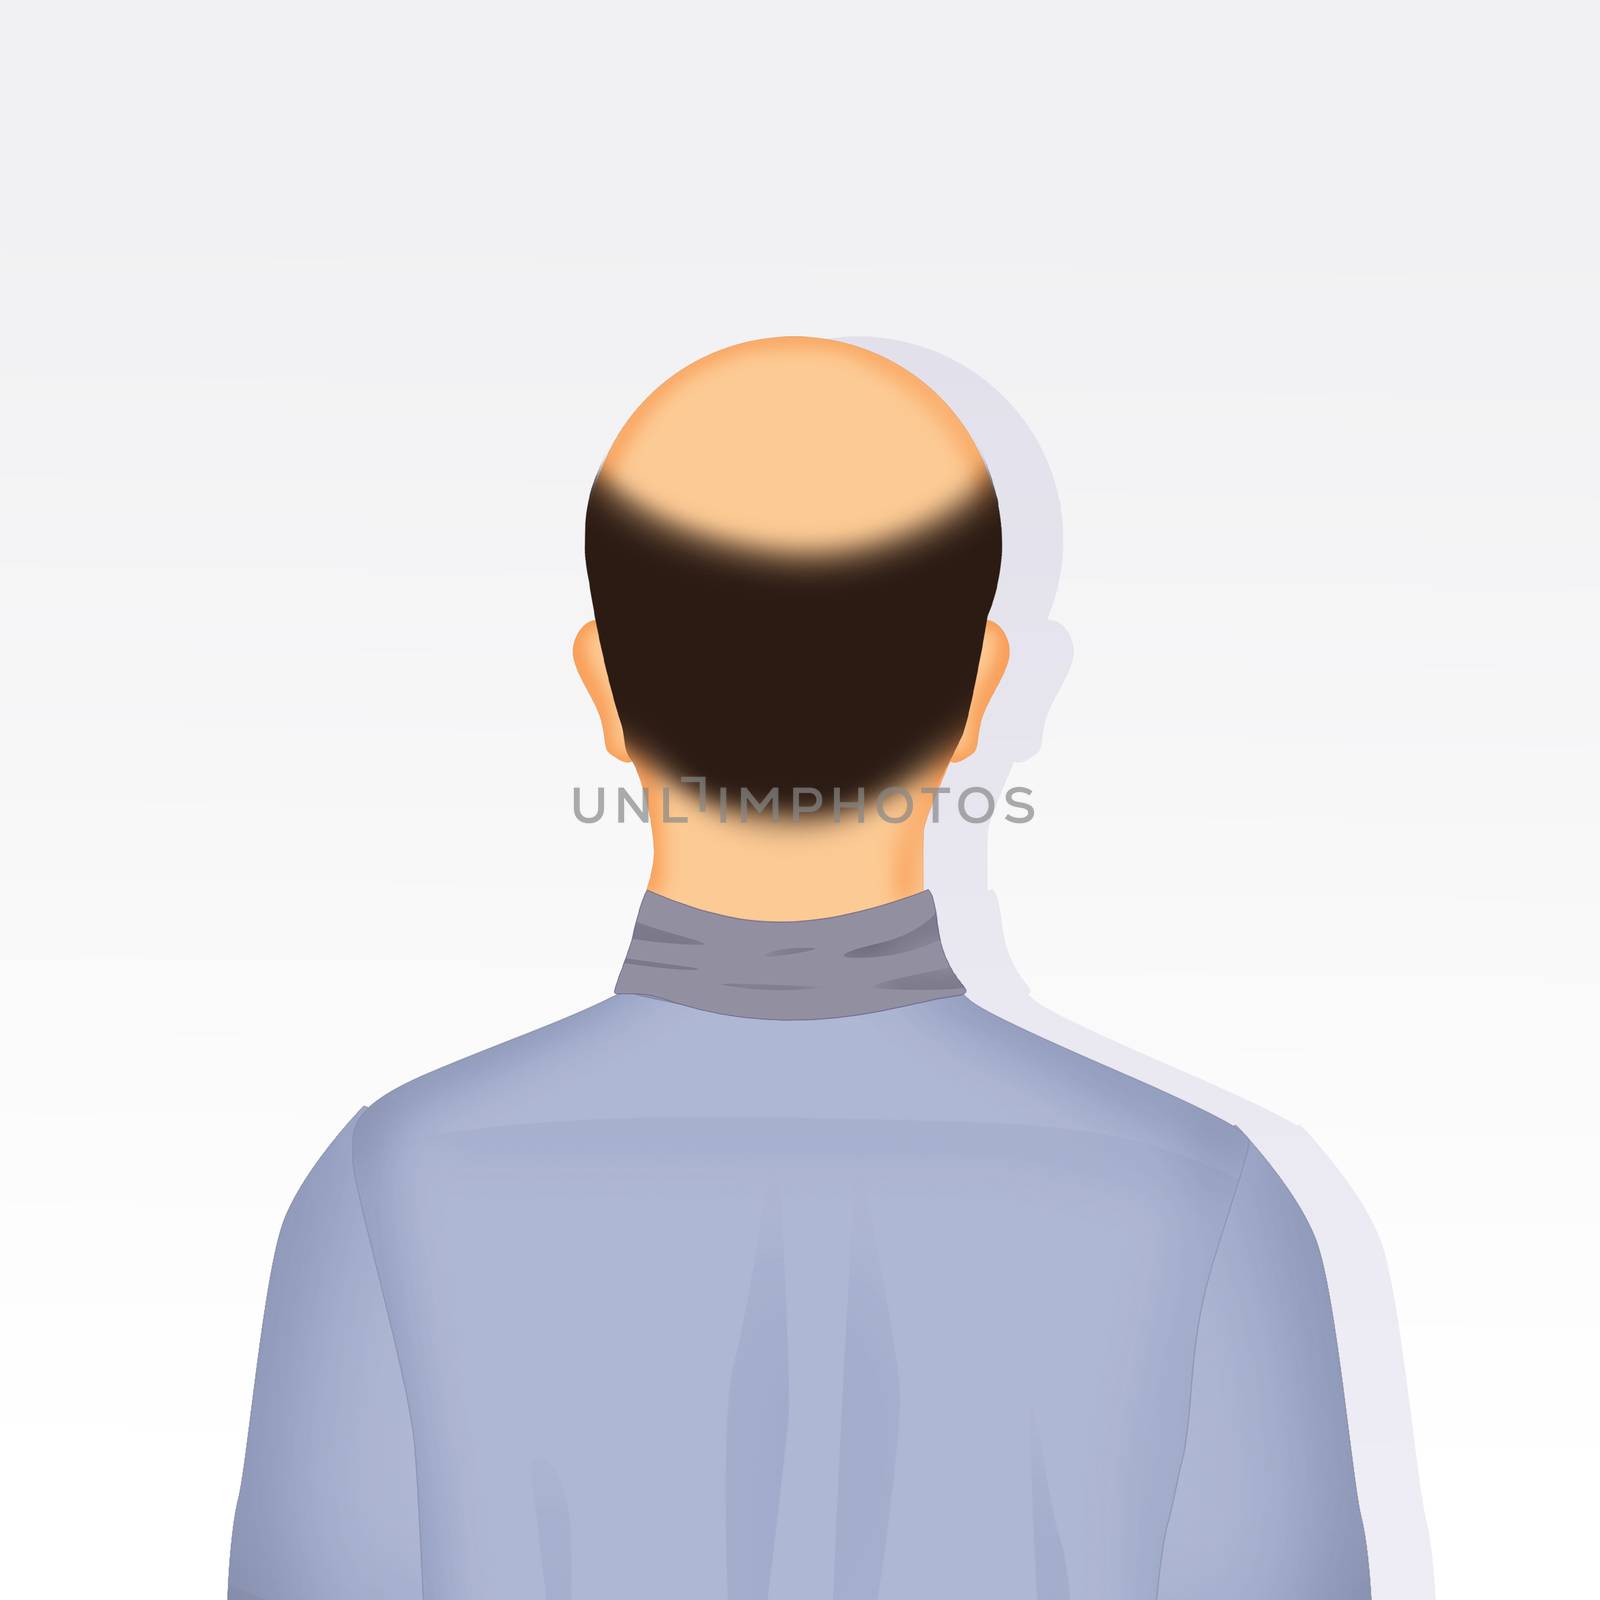 illustration of bald man